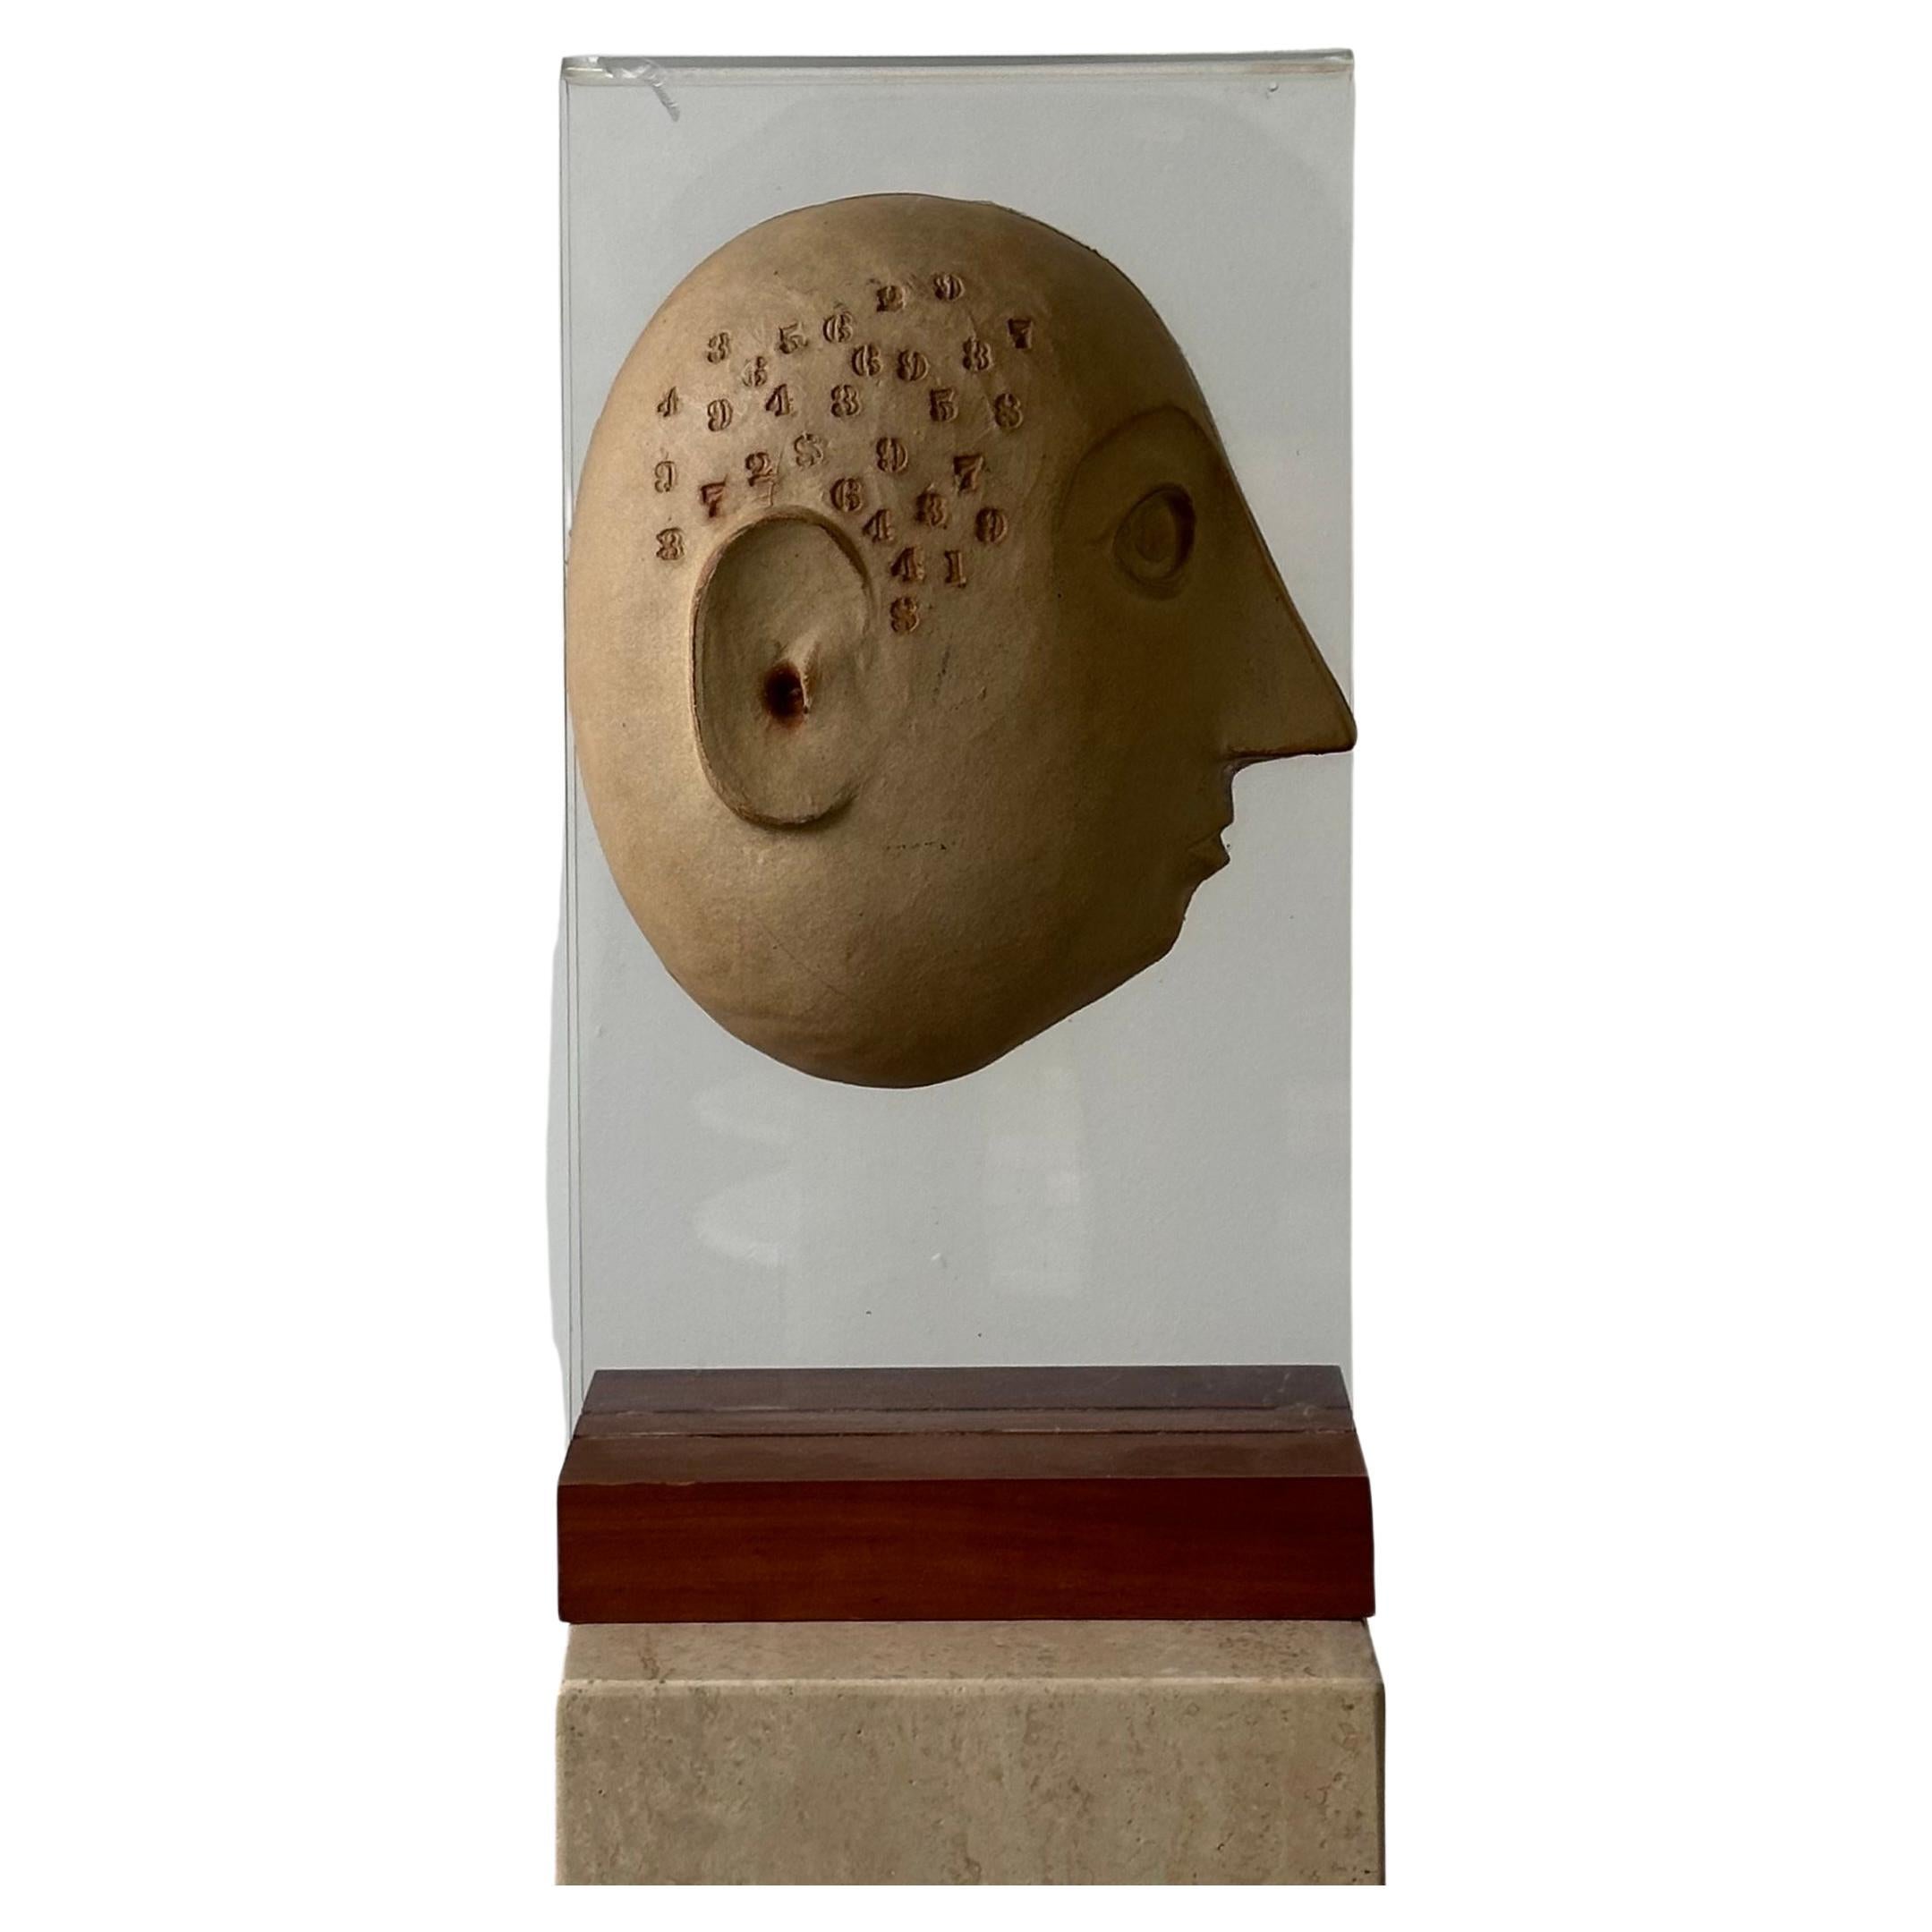 David Gil Ceramic Sculpture